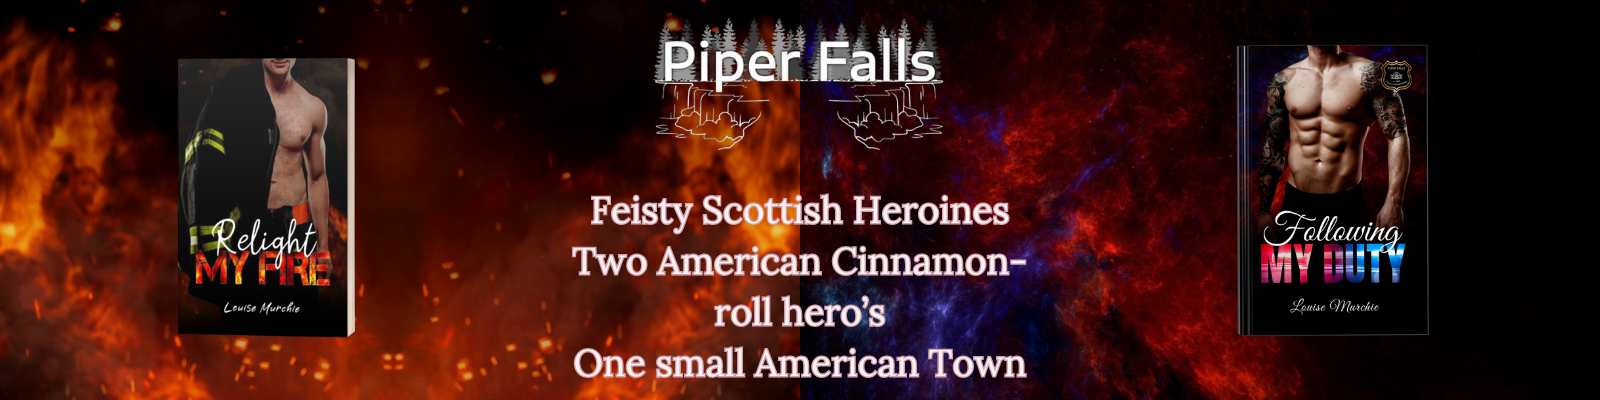 blurb about the 2 Piper Falls books